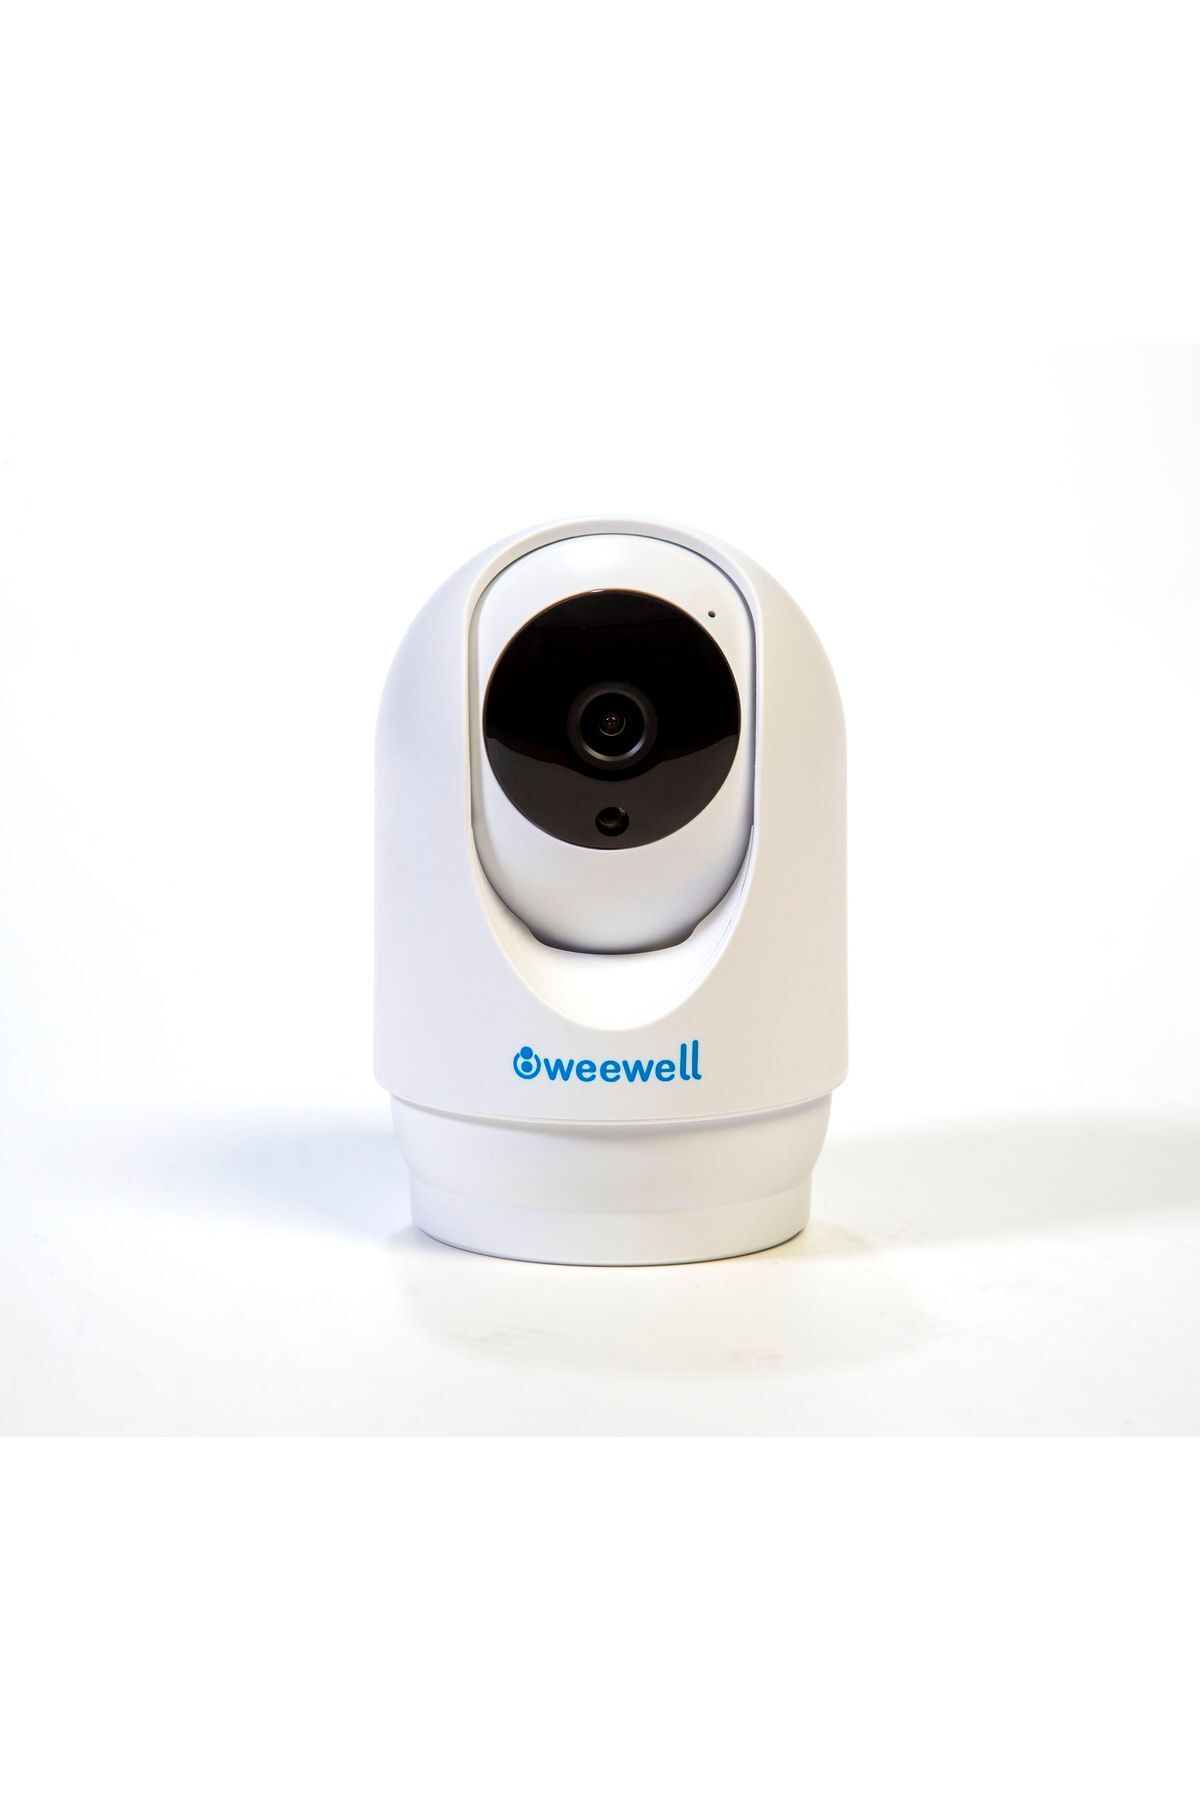 Weewell Wmv630 Digital Baby Video Monitor